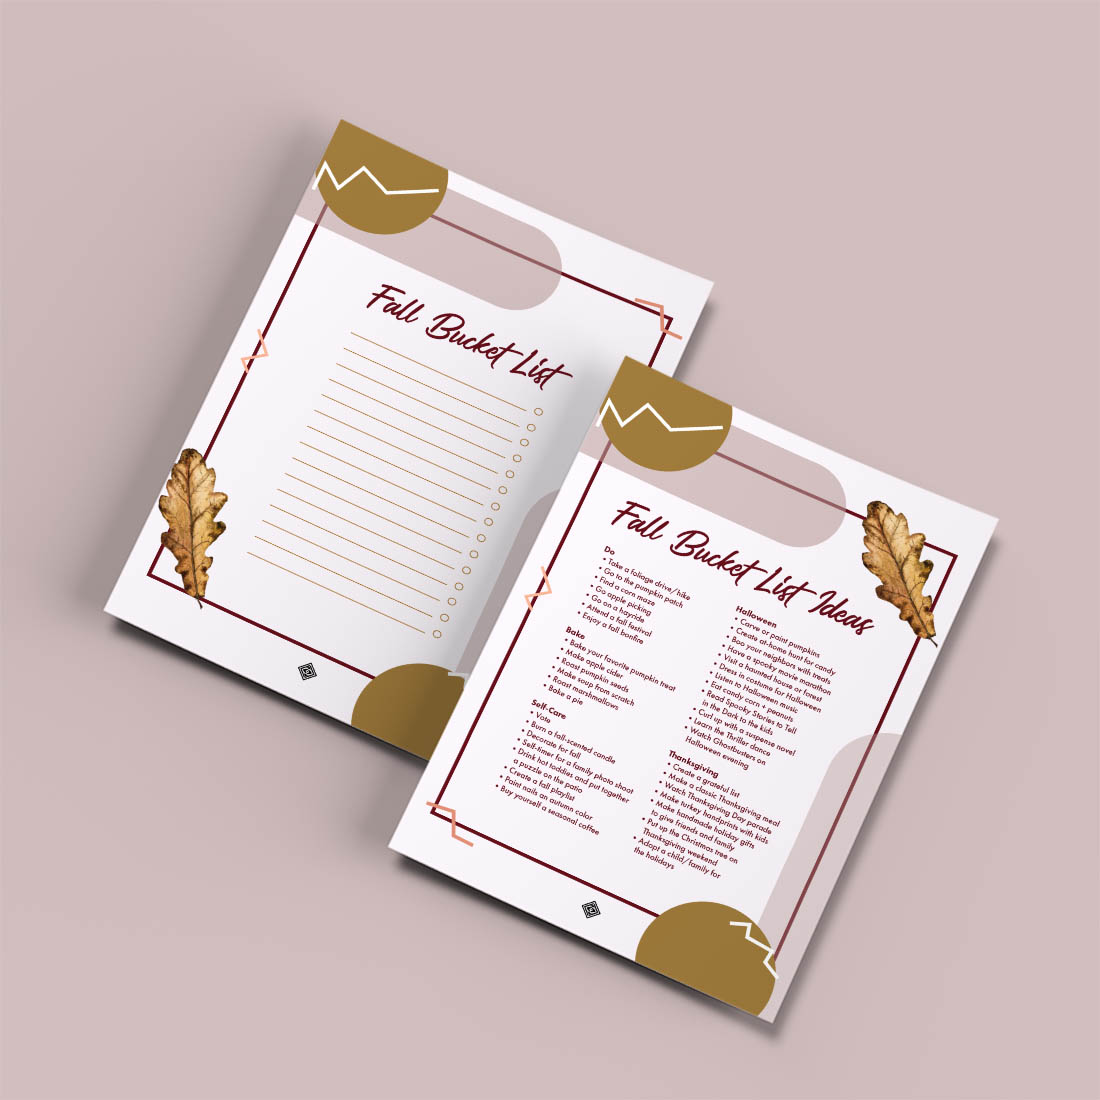 40 Fall Bucket List Ideas + Free Printables • Little Gold Pixel